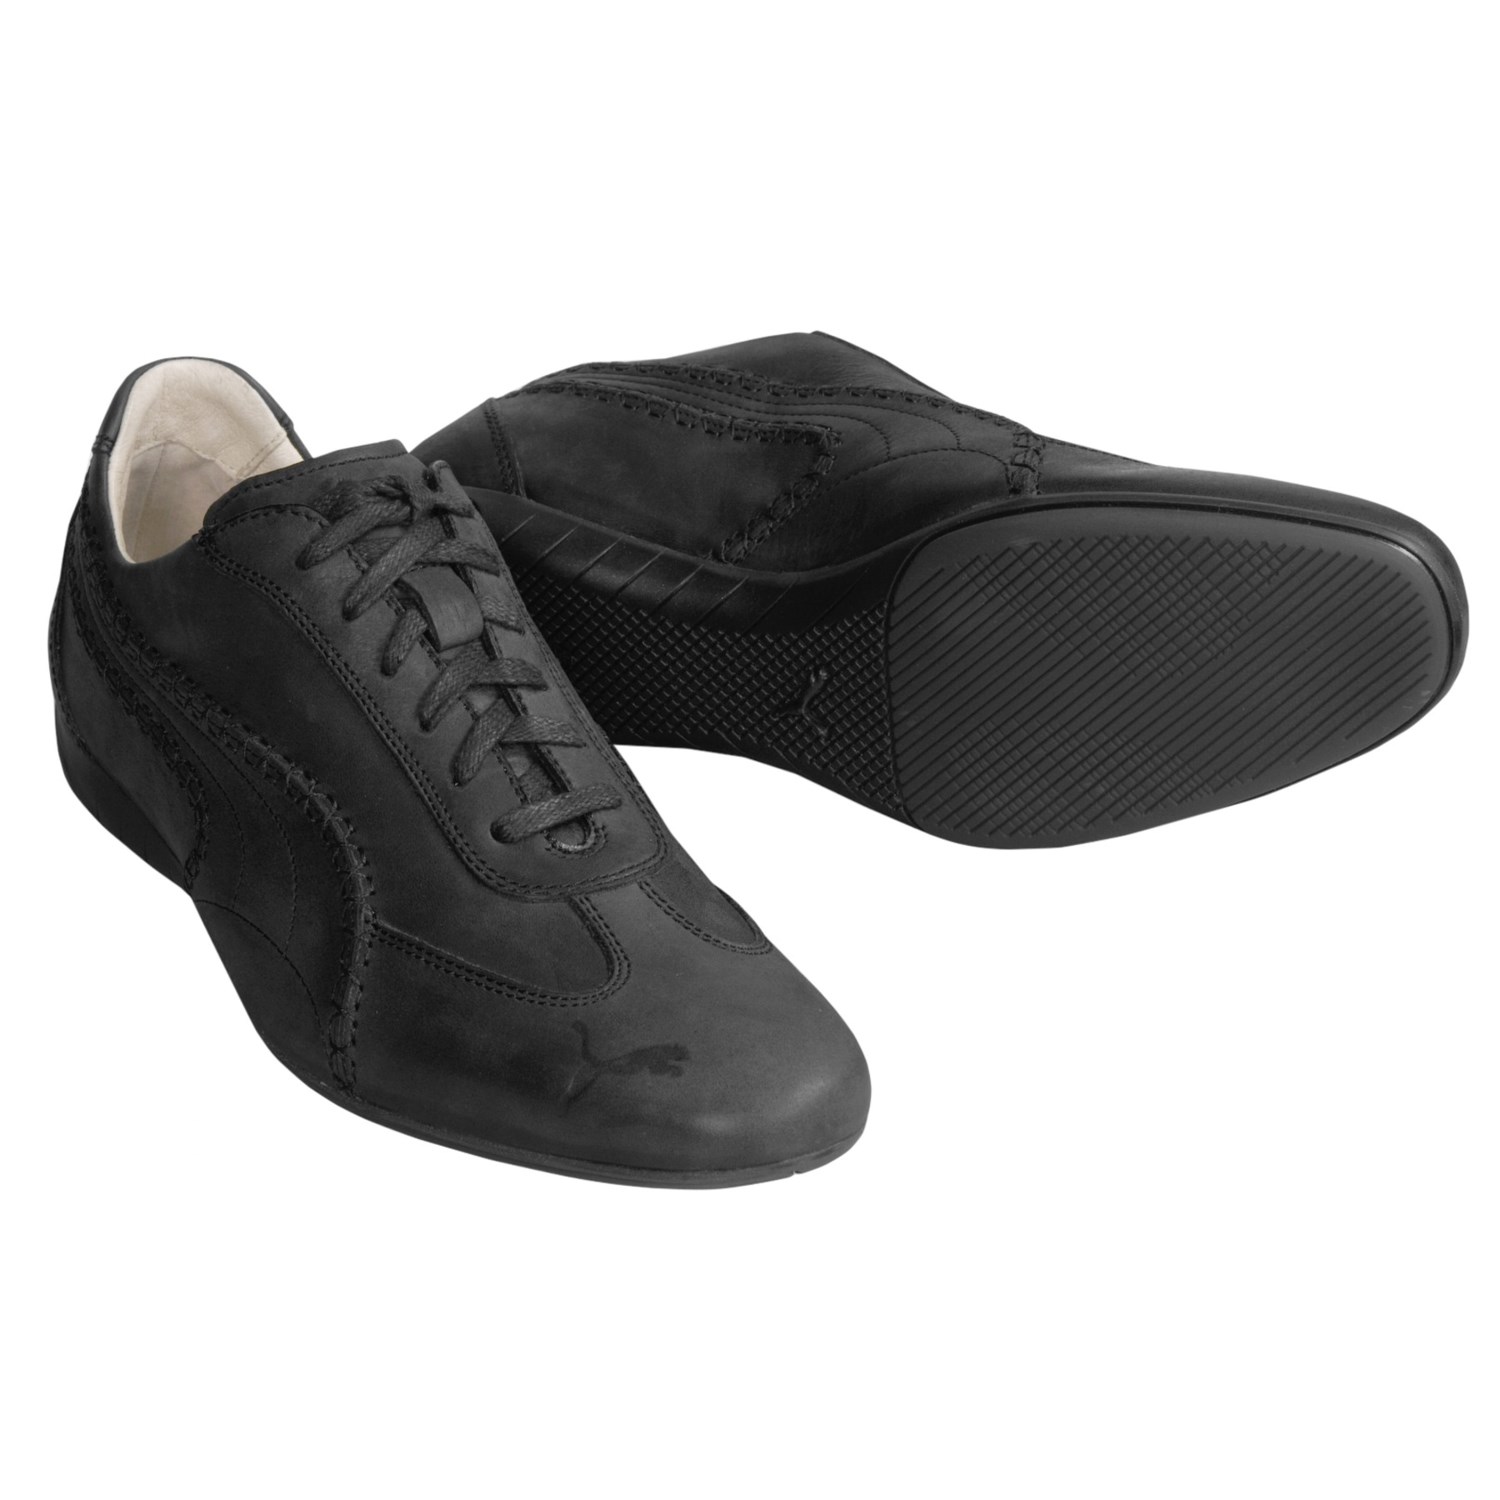 puma black label shoes - 58% OFF 